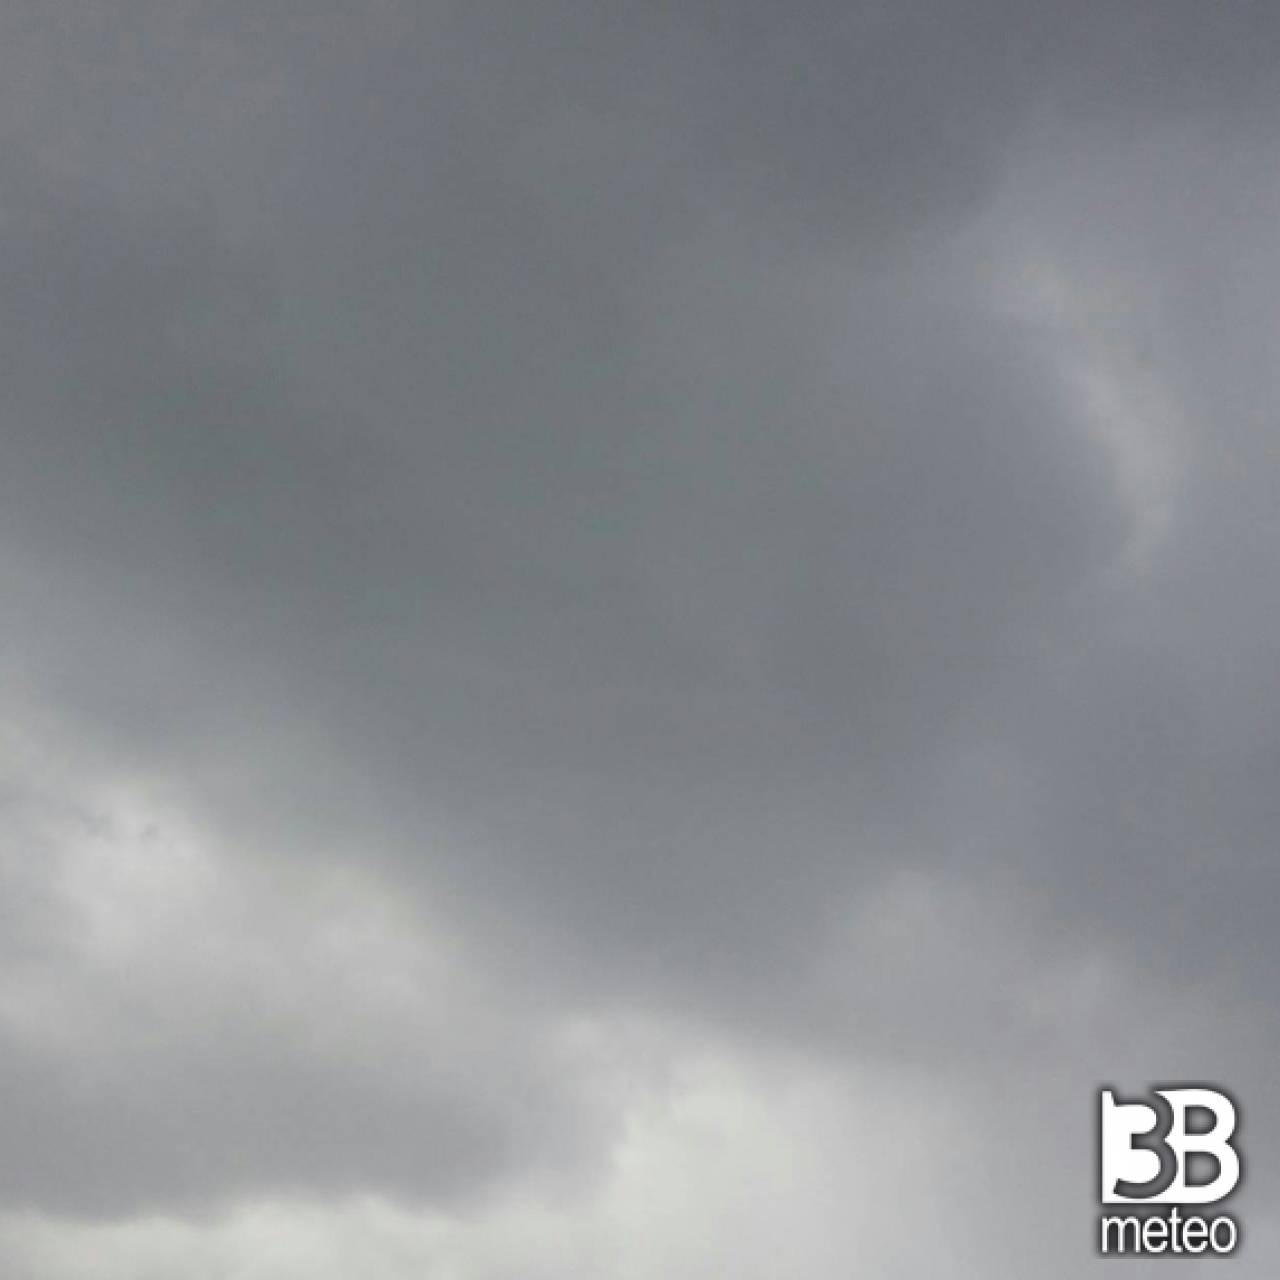 Meteo Brindisi: molte nubi fino a martedì, variabile mercoledì - 3bmeteo